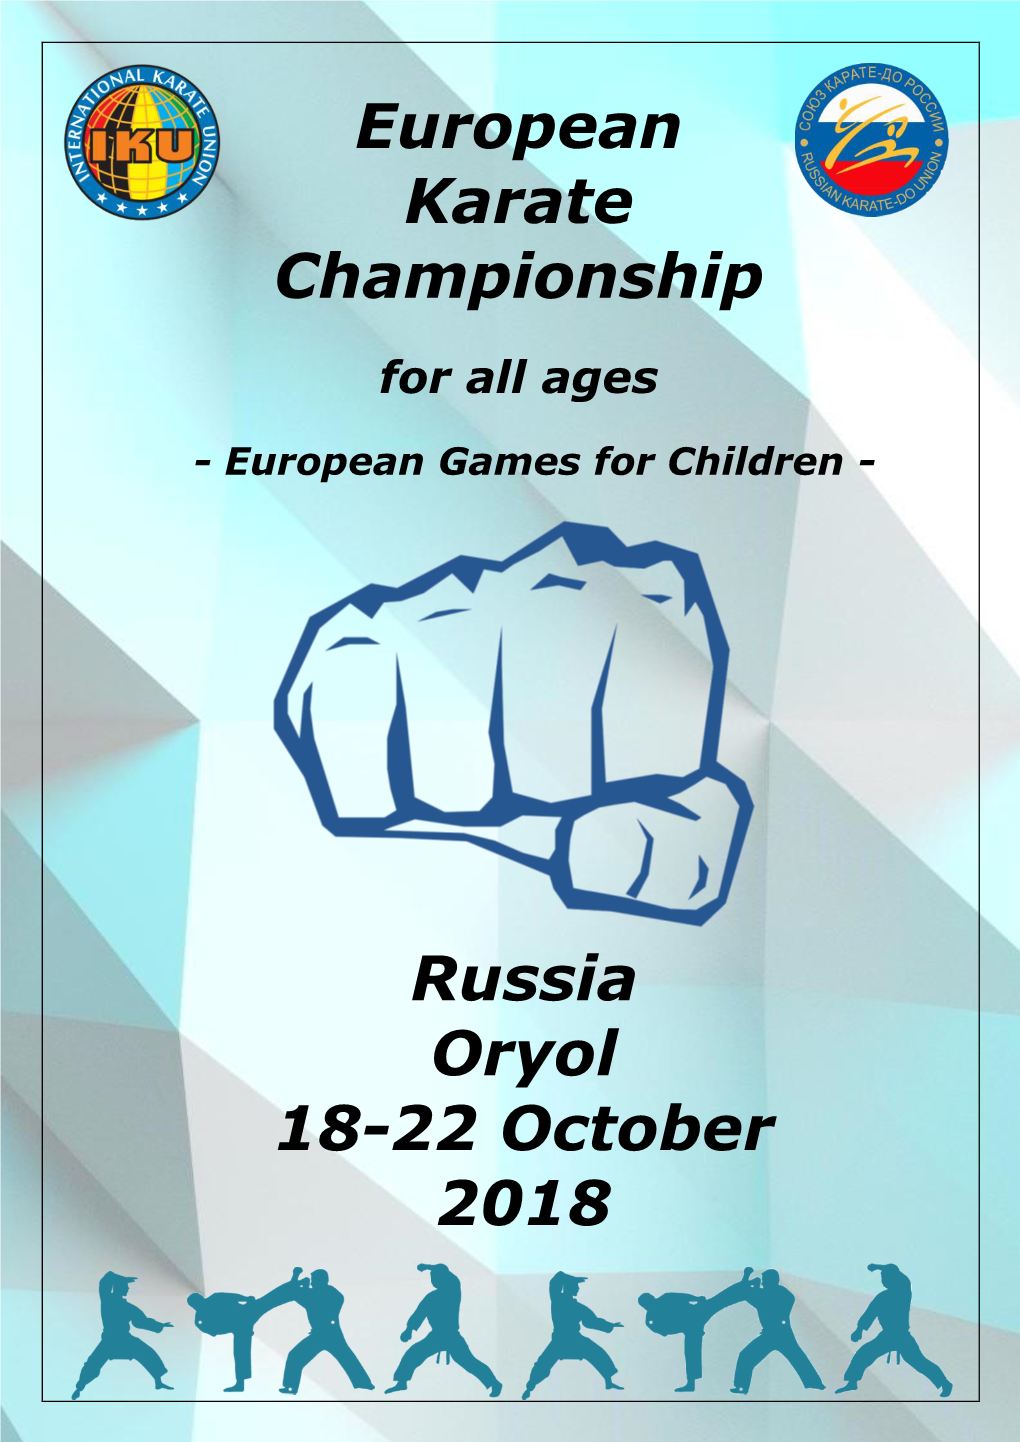 European Karate Championship Russia Oryol 18-22 October 2018